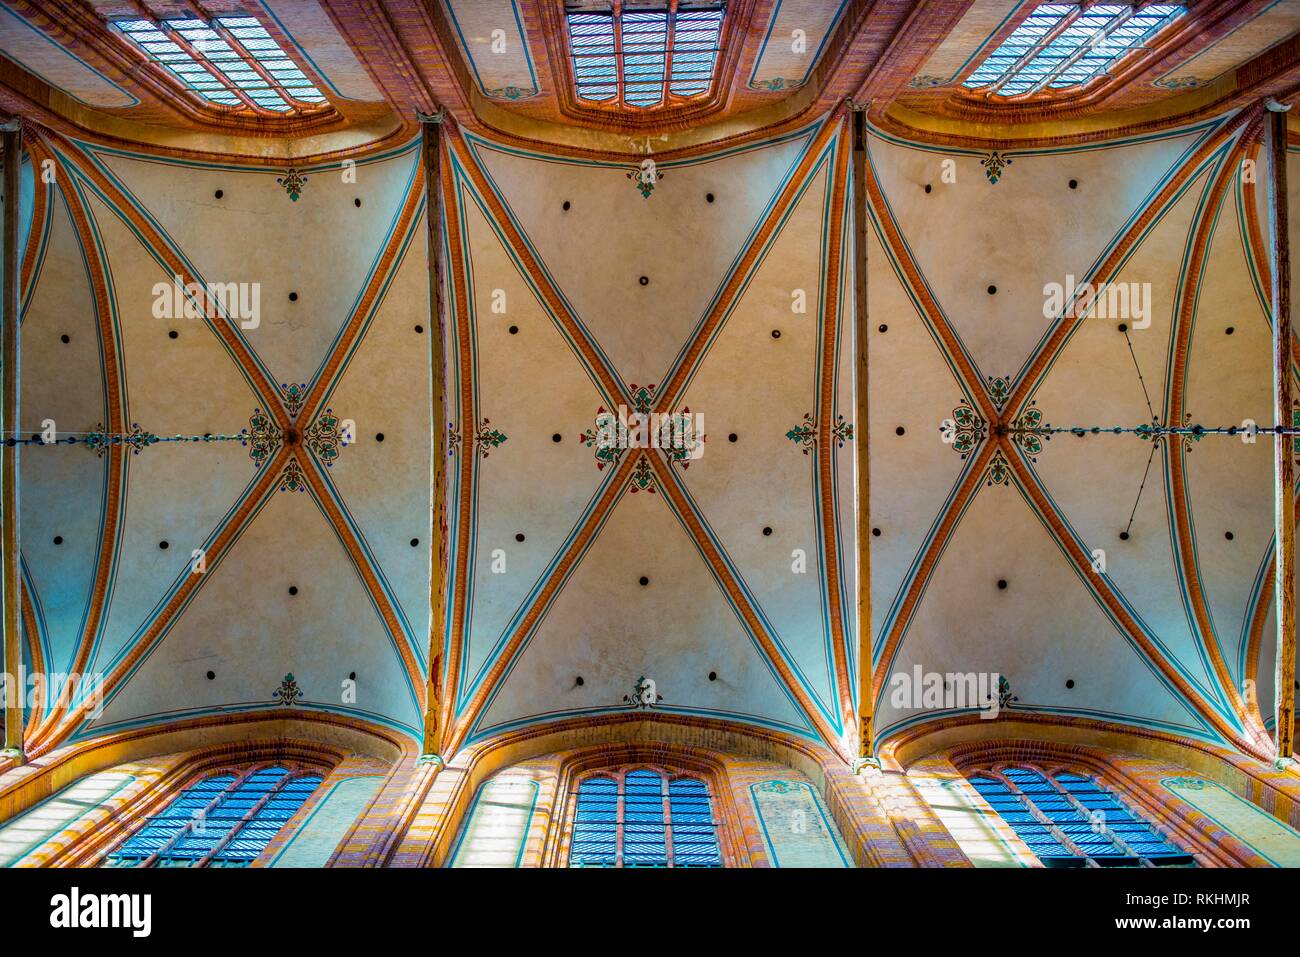 Ceiling vault of the church St. Nikolai, Brick Gothic, Wismar, Mecklenburg-Western Pomerania, Germany Stock Photo